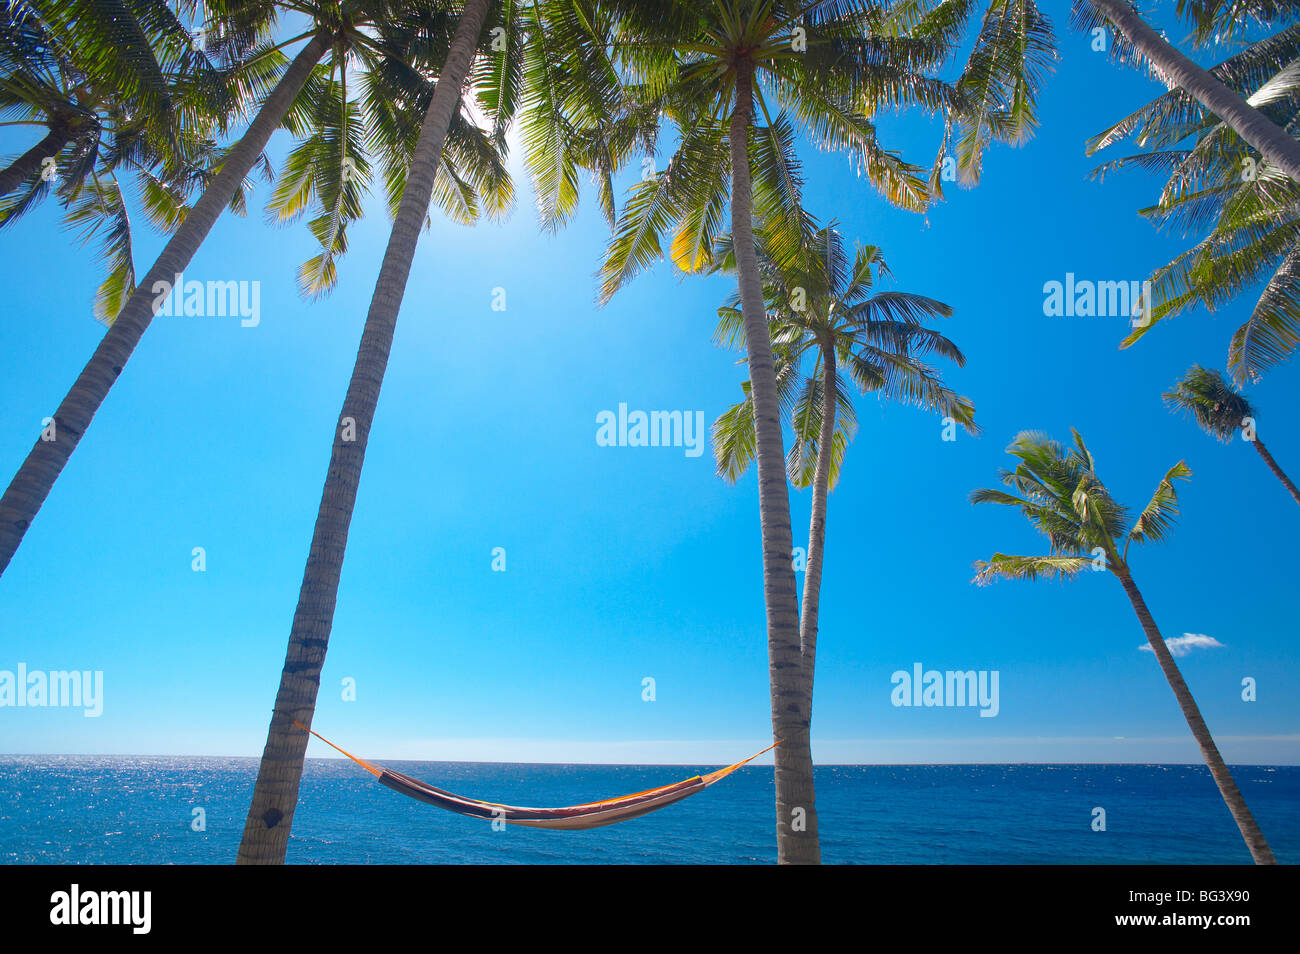 Hammock between palm trees on beach, Bali, Indonesia, Southeast Asia, Asia Stock Photo